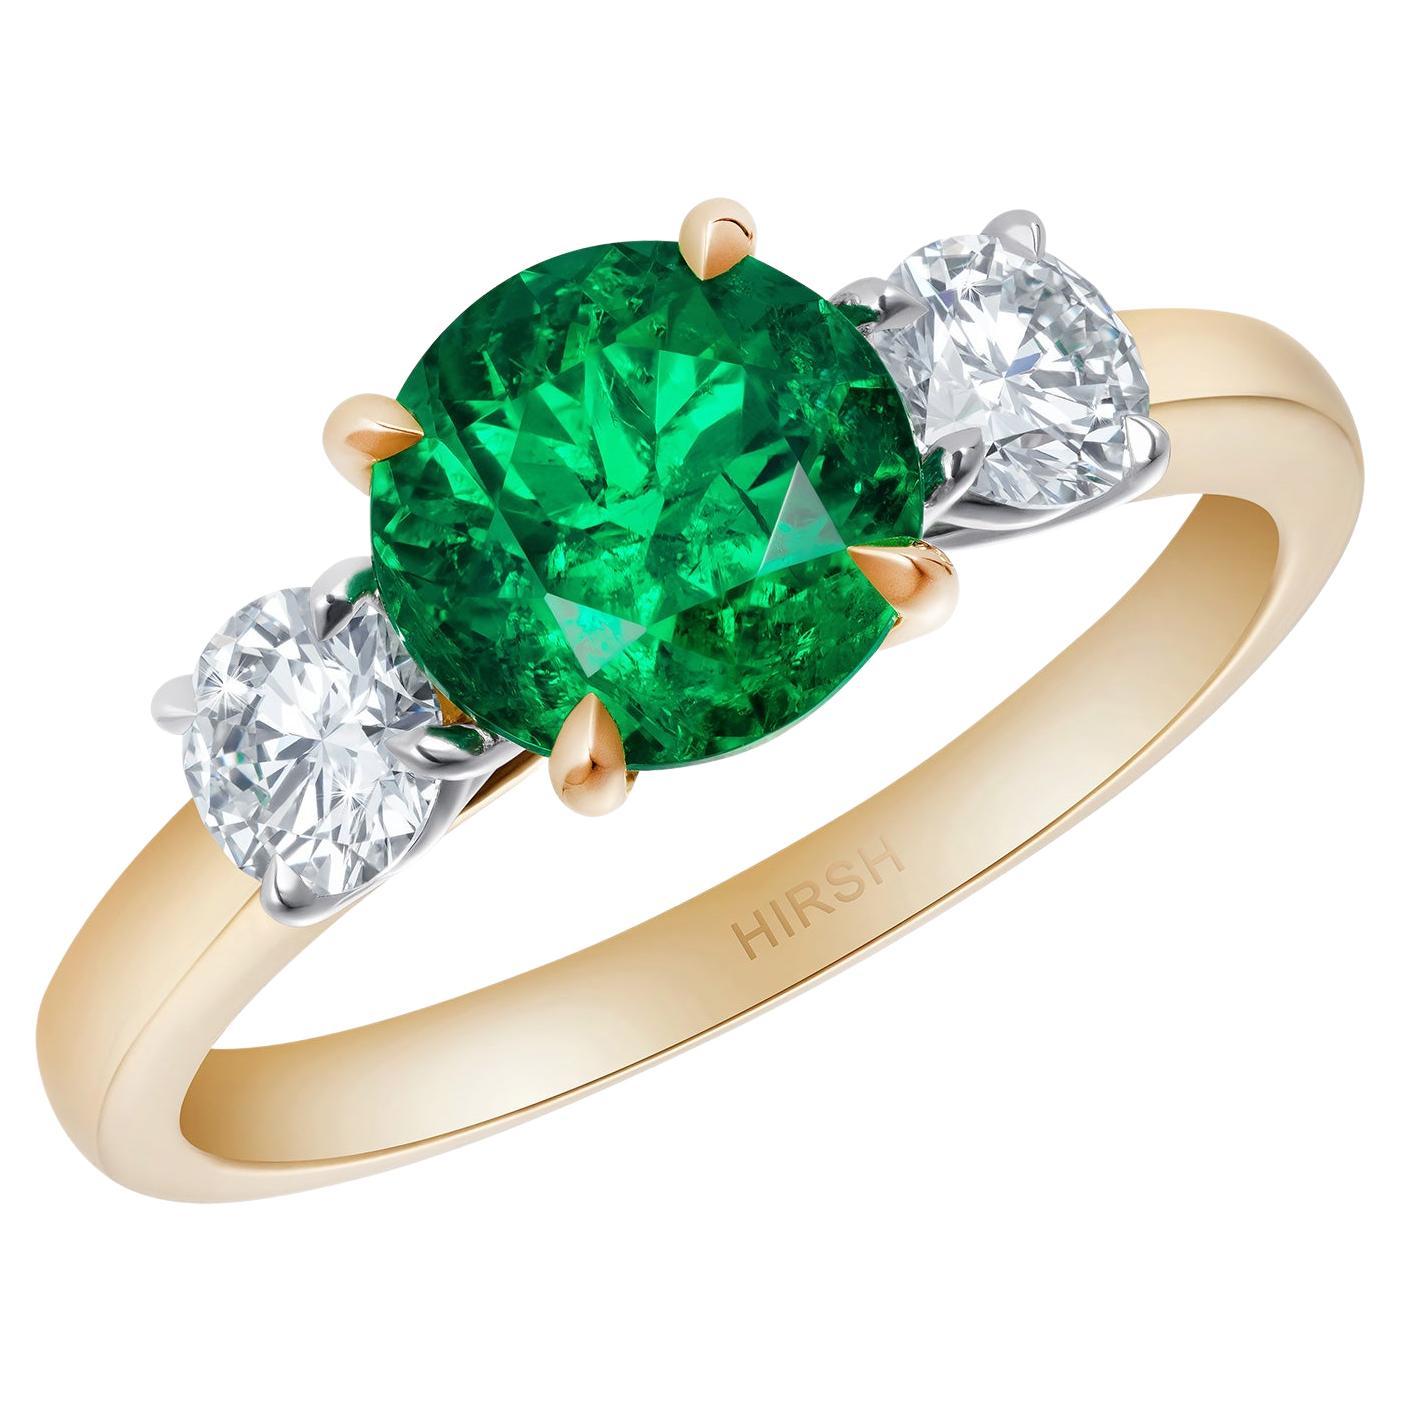 Hirsh Trilogy Emerald and Diamond Ring